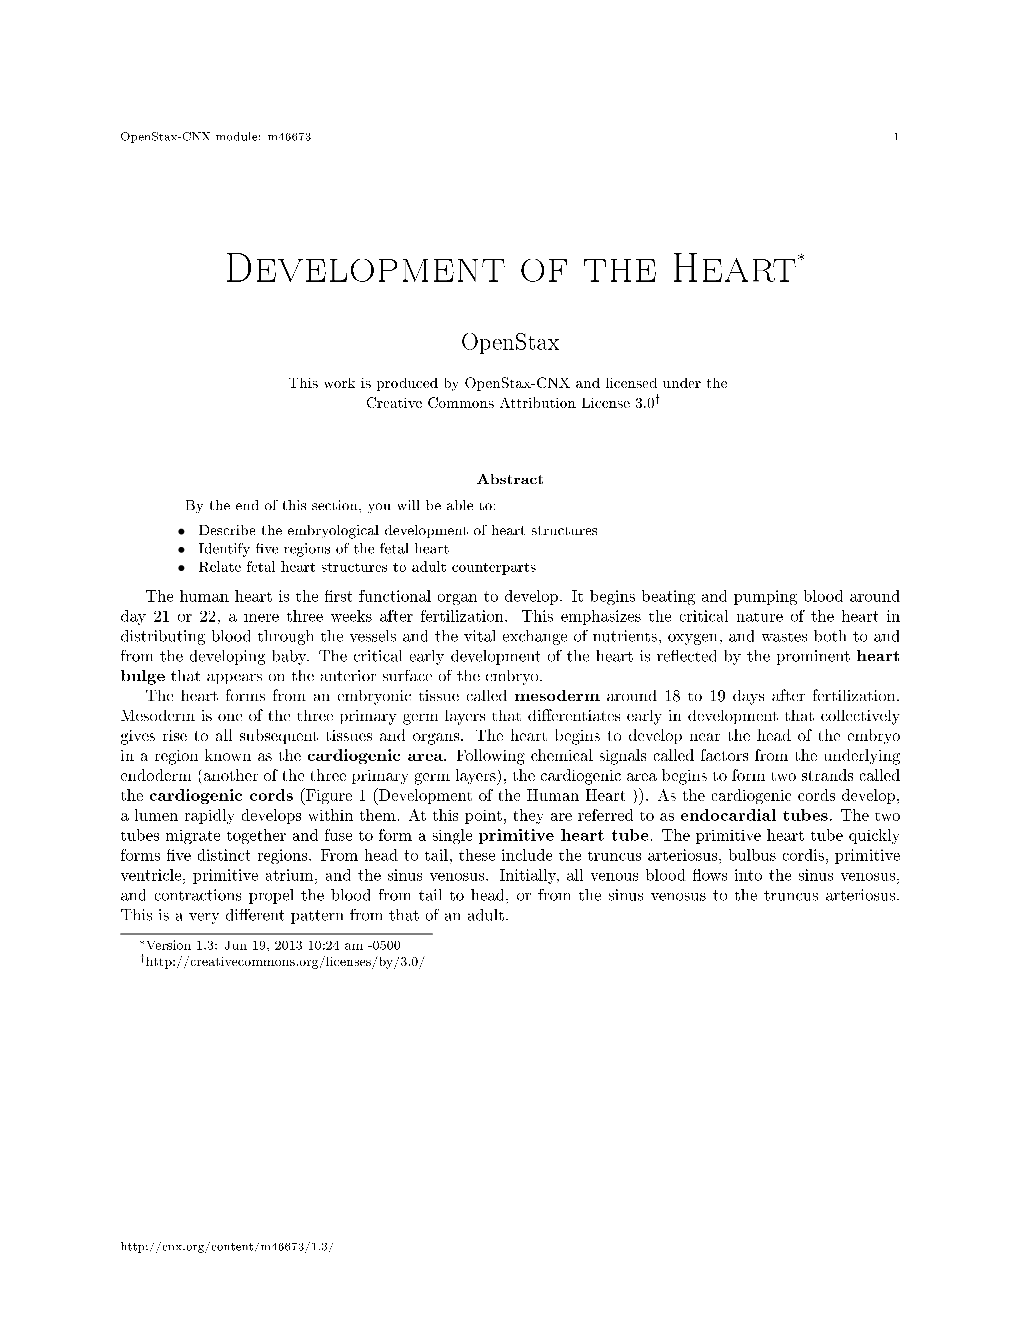 Development of the Heart*